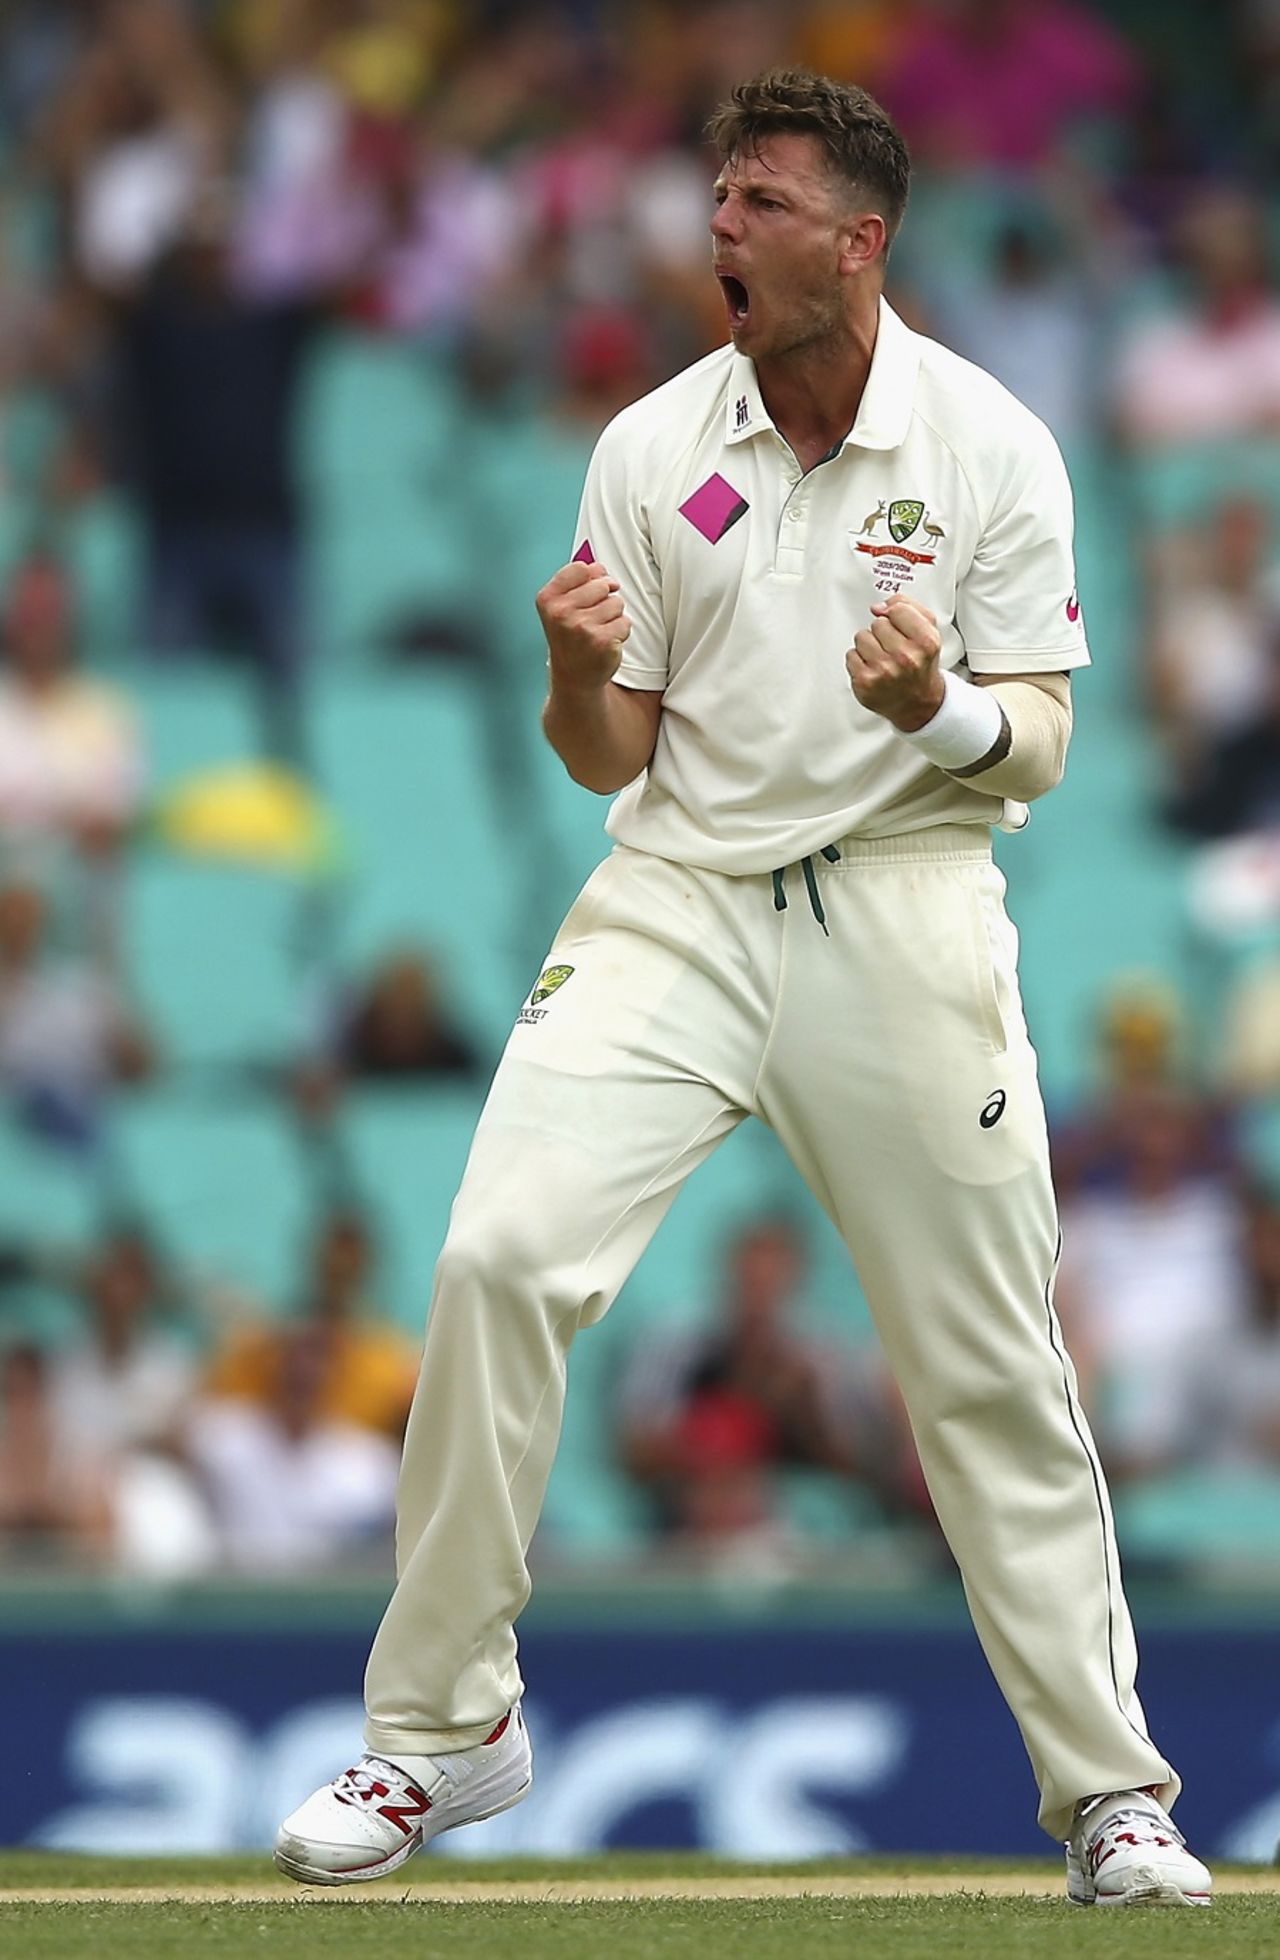 James Pattinson roars after bowling Carlos Brathwaite, Australia v West Indies, 3rd Test, Sydney, 2nd day, January 4, 2016